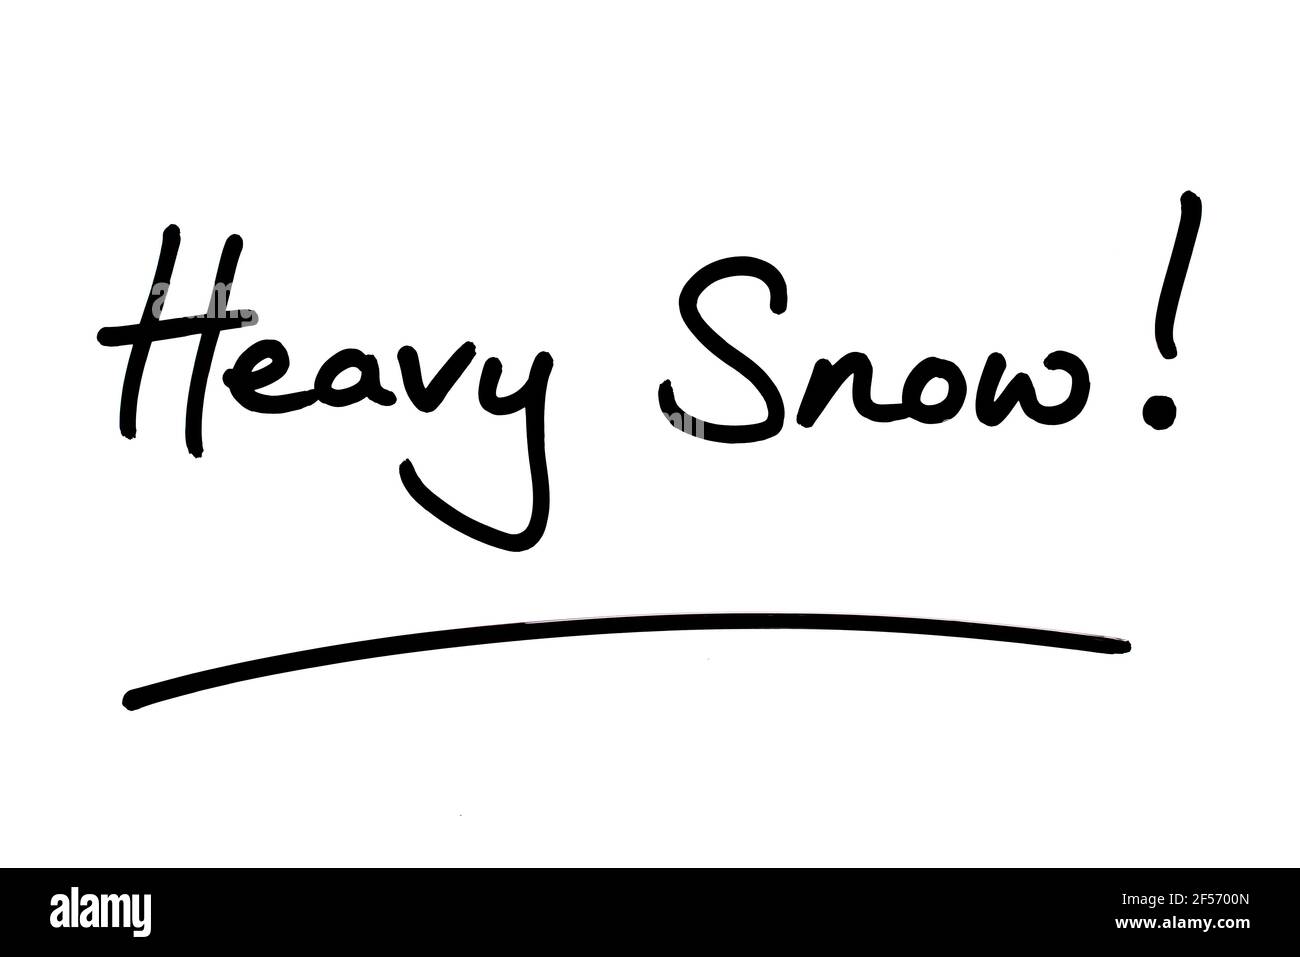 Heavy Snow! handwritten on a white background. Stock Photo